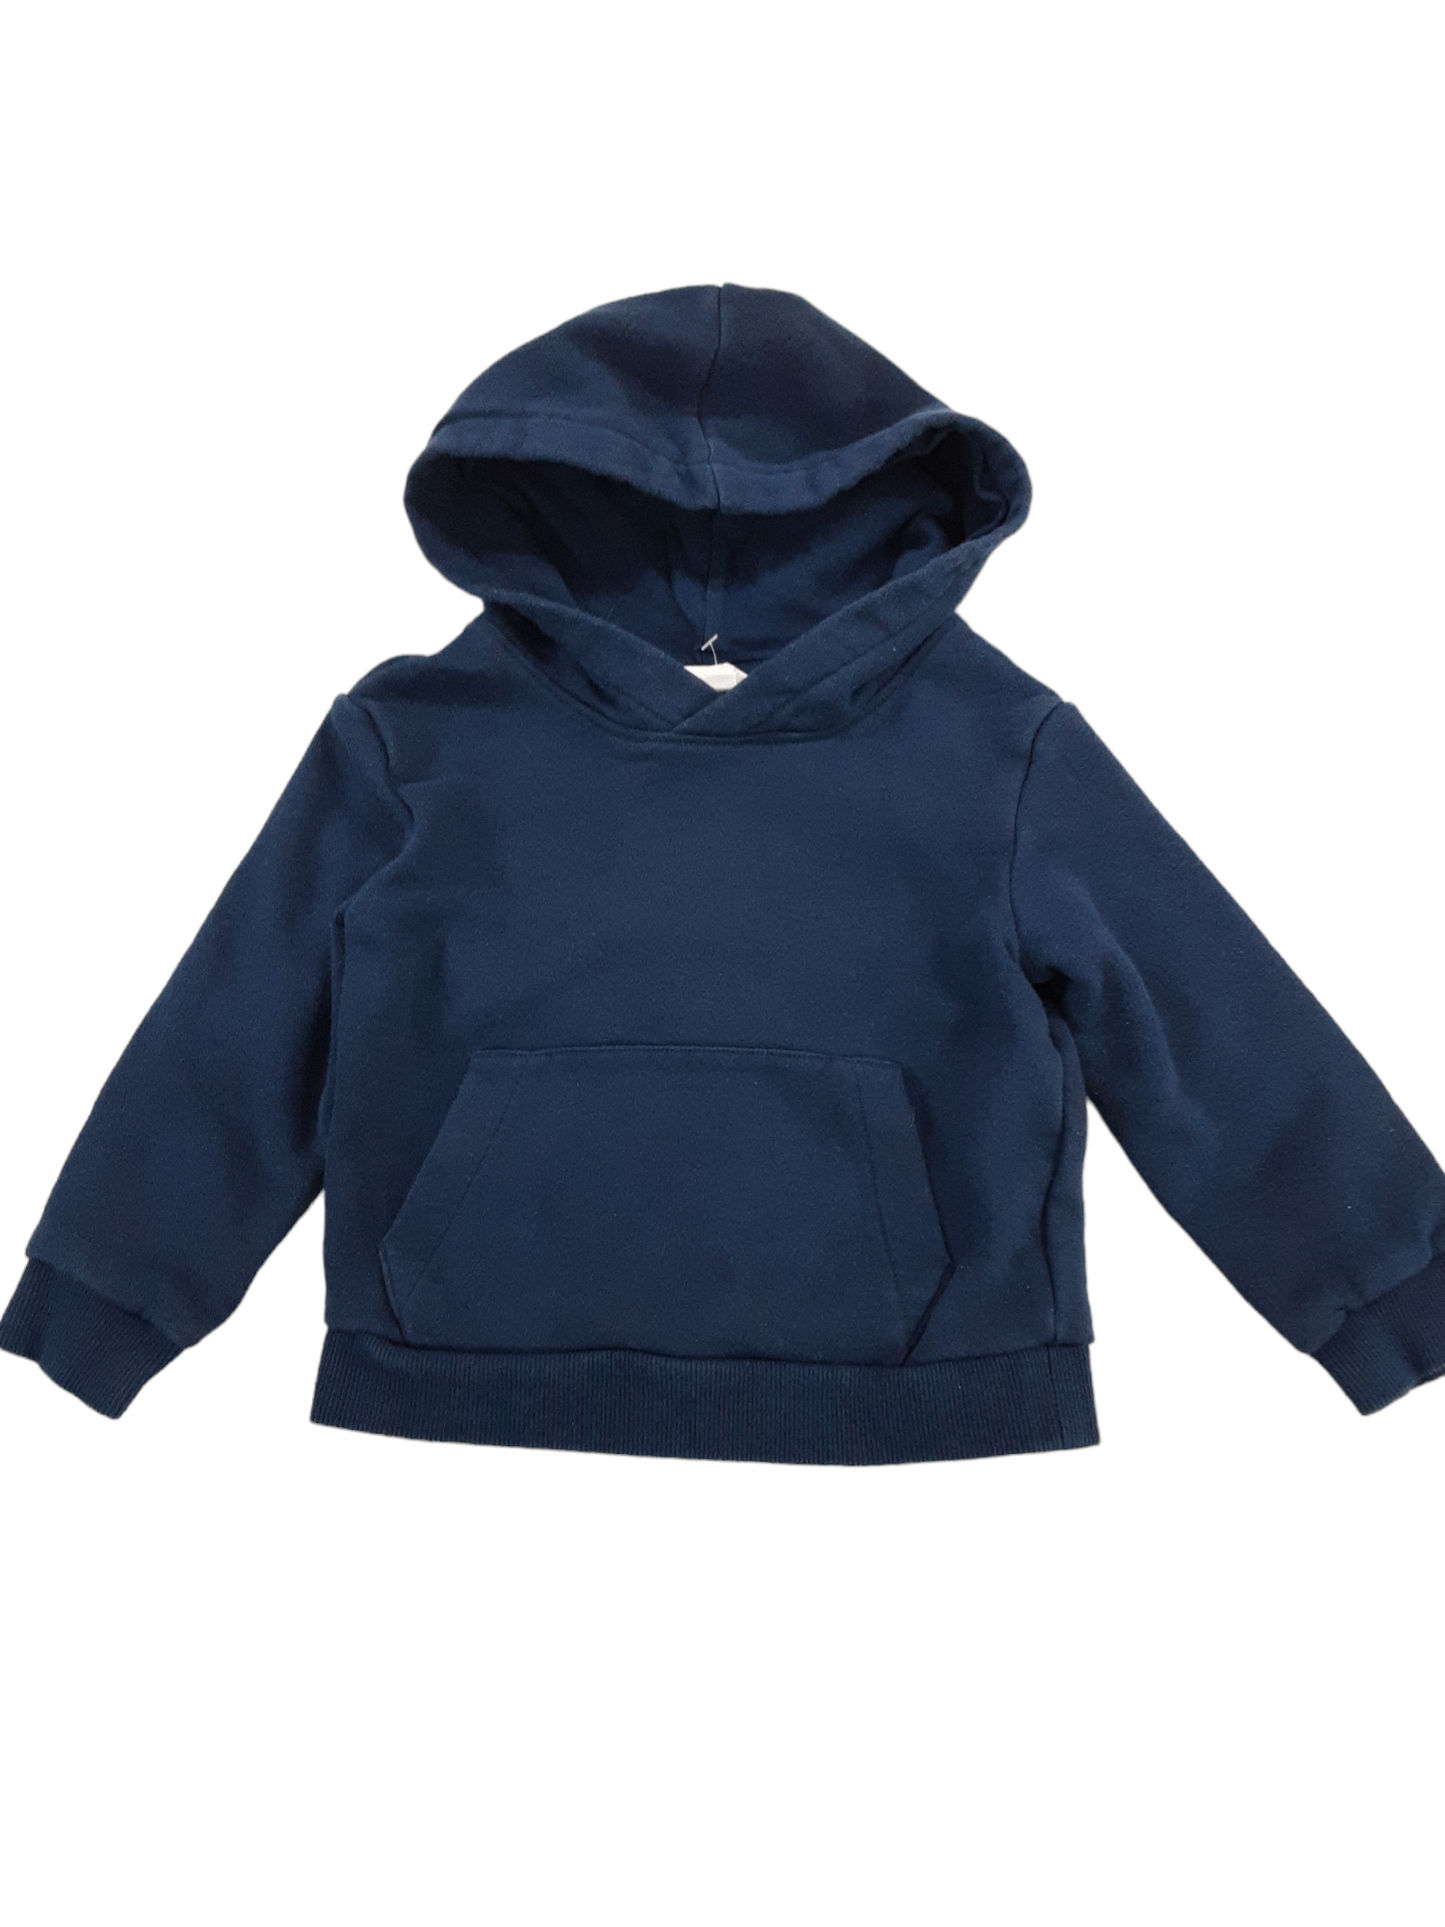 Navy fleece hoodie size 1 1/2 yrs- 2